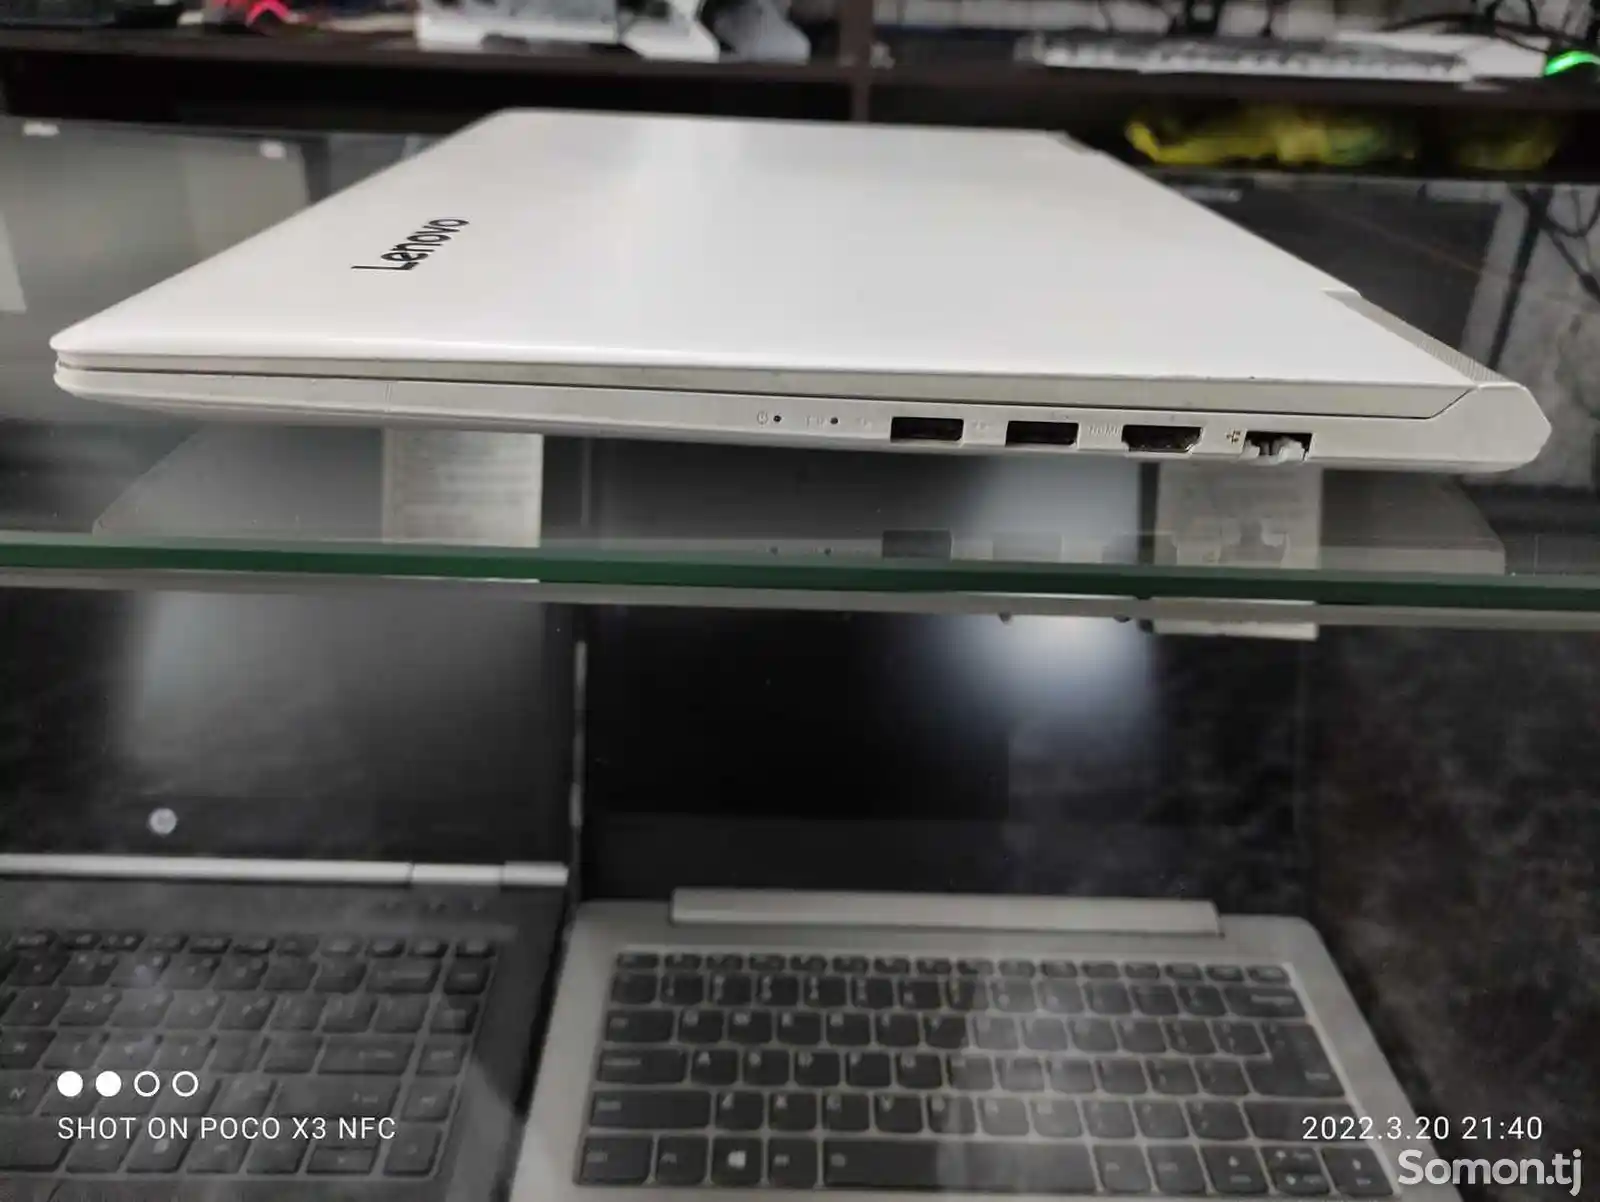 Игровой Ноутбук Lenovo Ideapad 700 Core i7-6700HQ GTX 950M 2GB-9